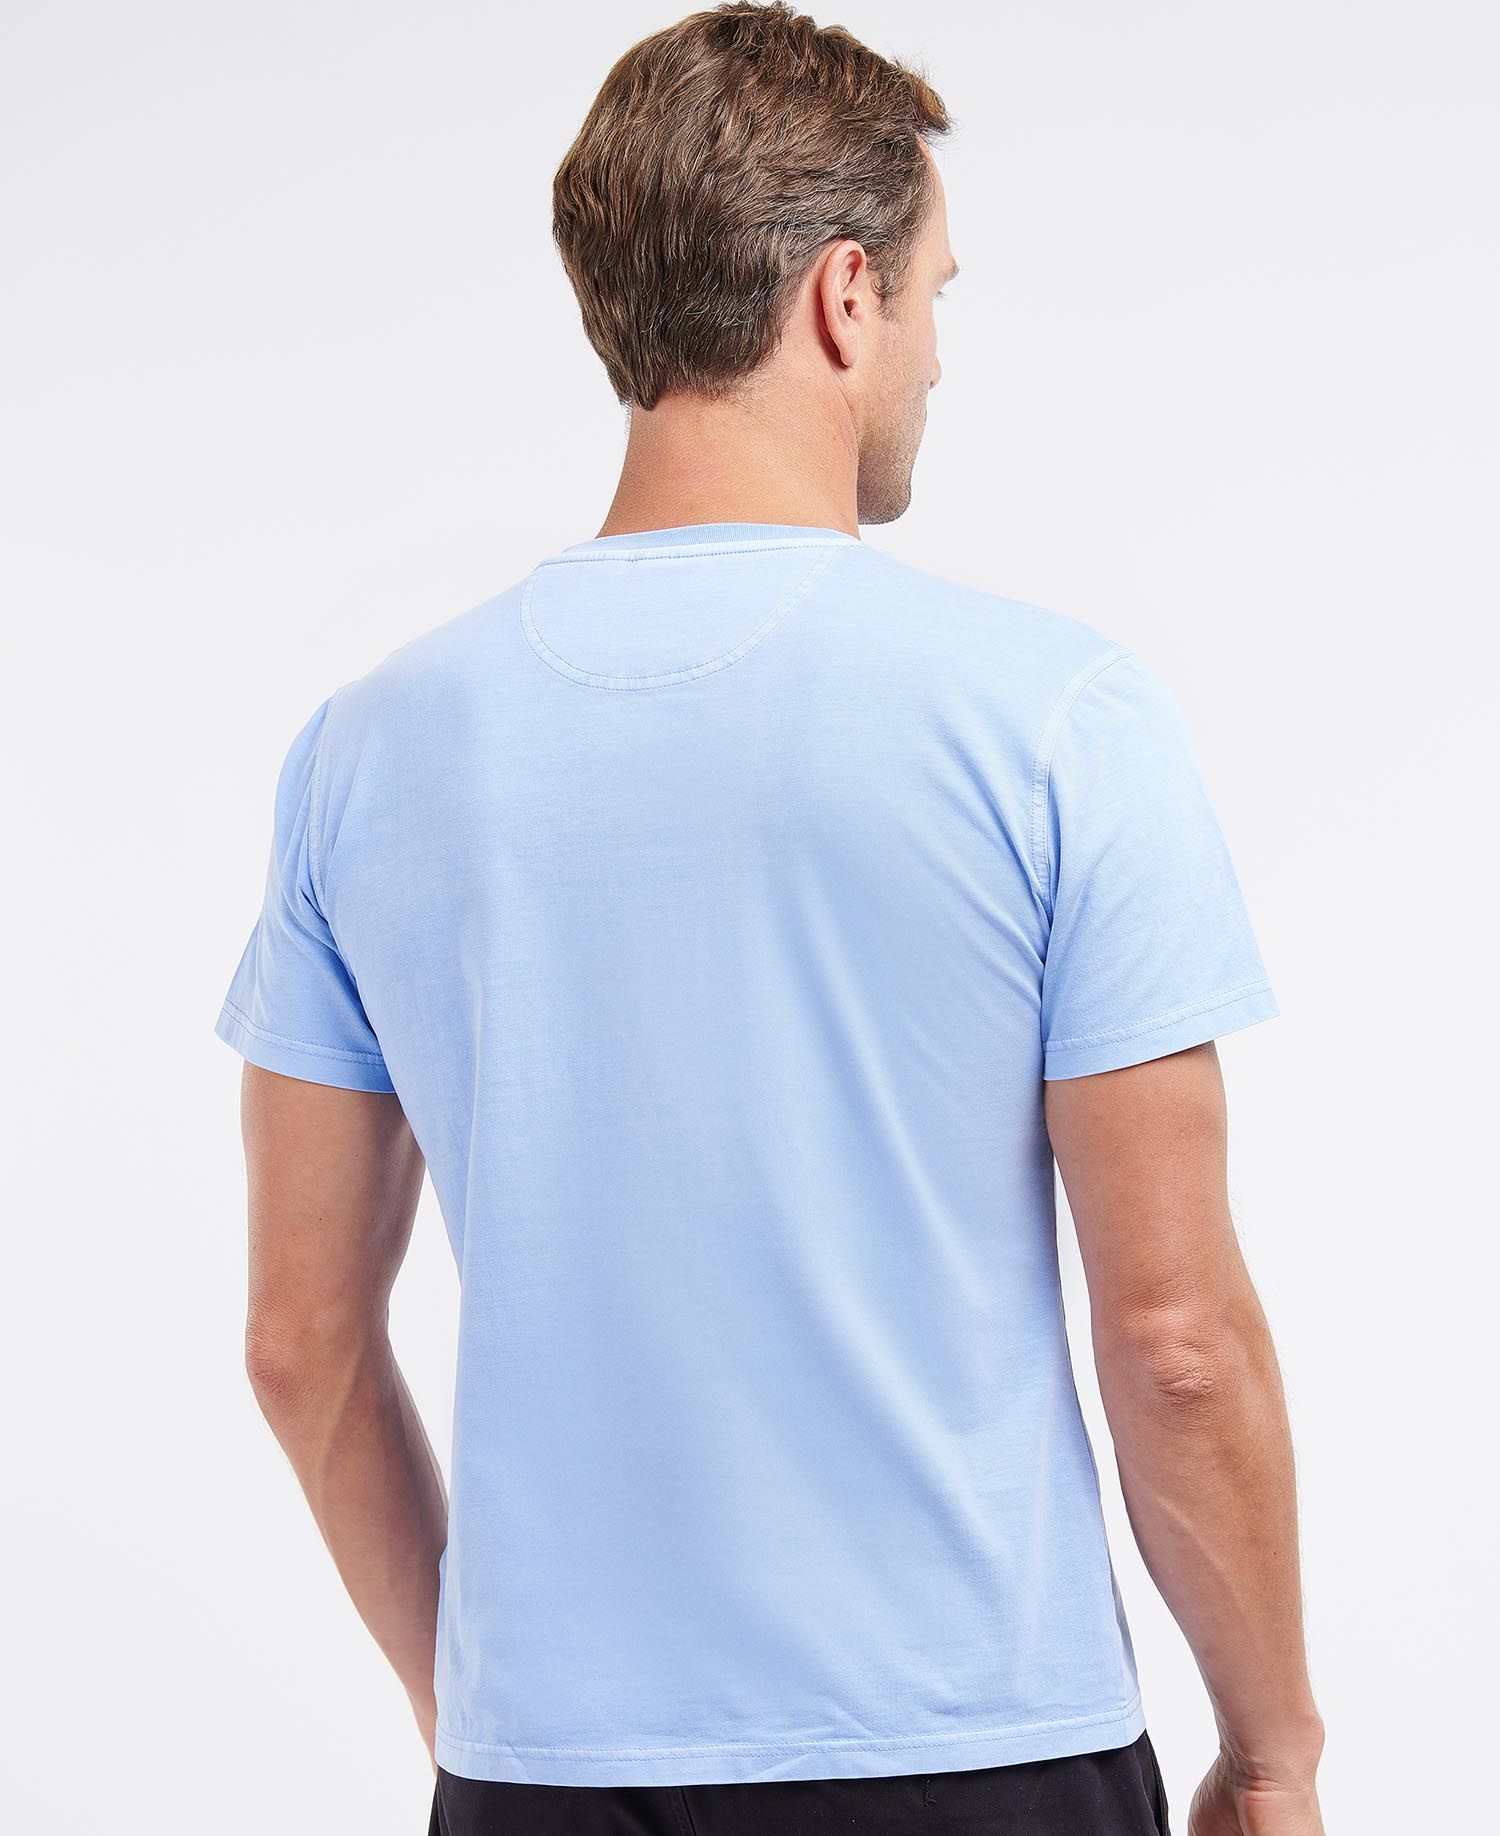 Barbour Garment Dyed T-Shirt Sky